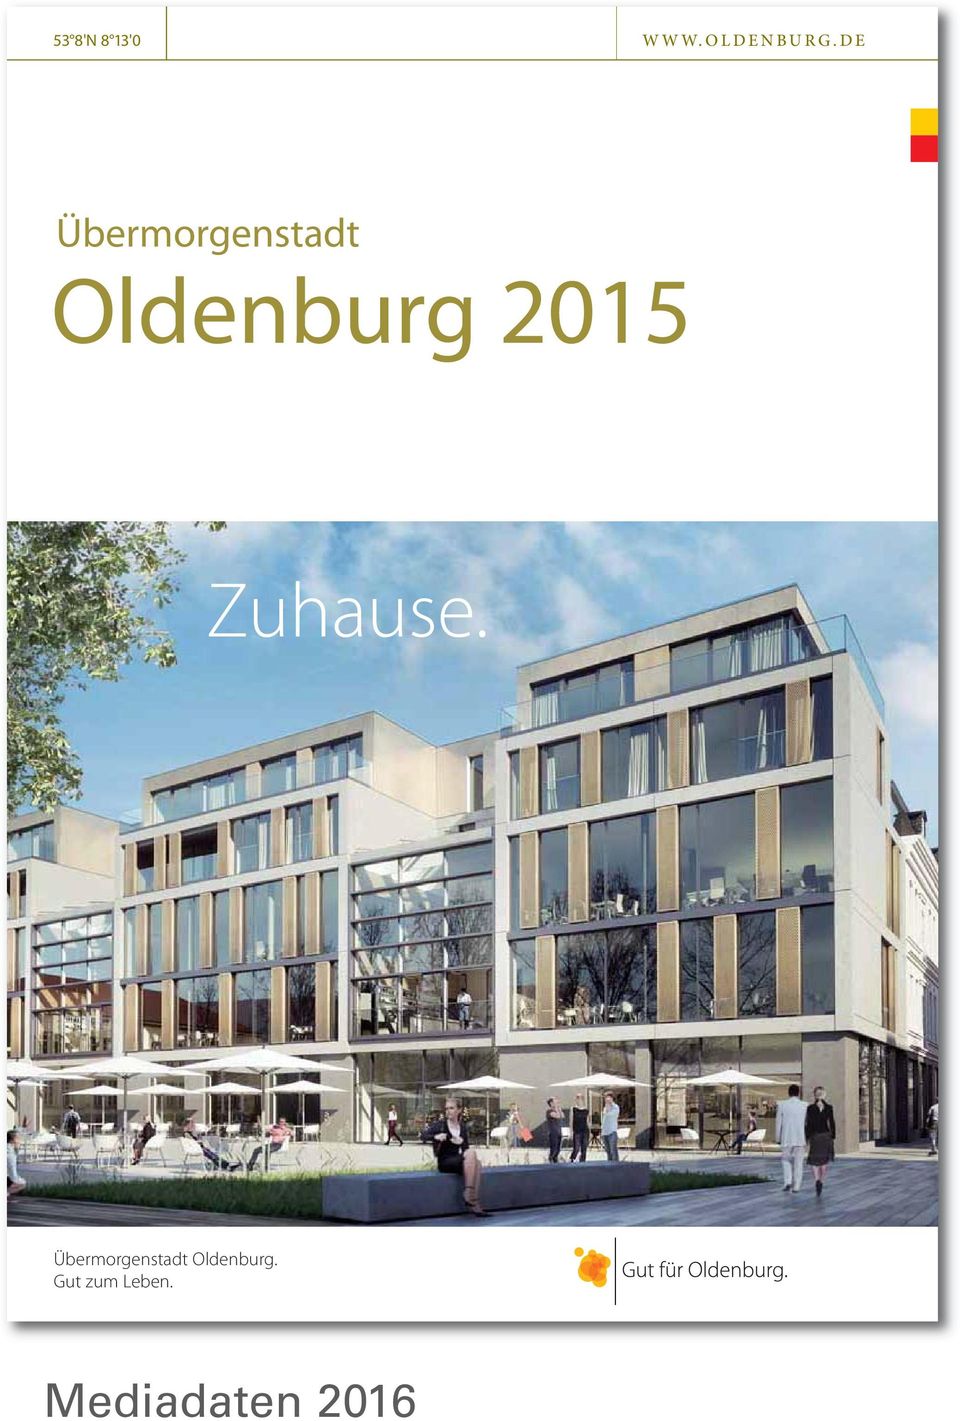 2015 Zuhause.